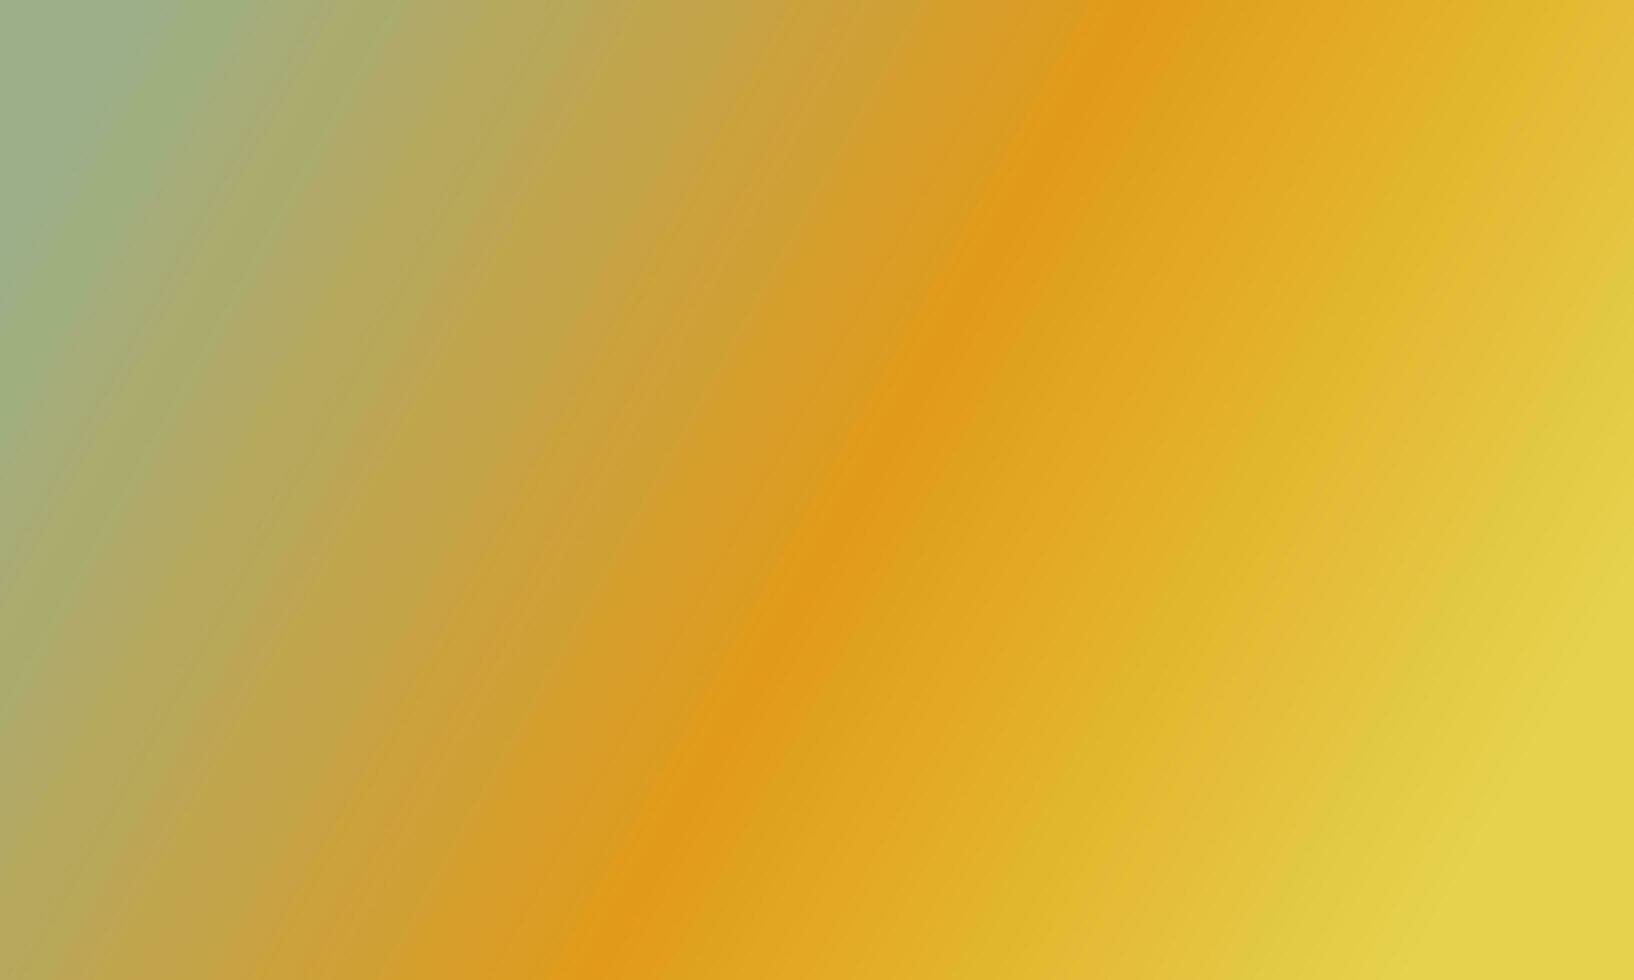 Projeto simples sábio verde, laranja e amarelo gradiente cor ilustração fundo foto